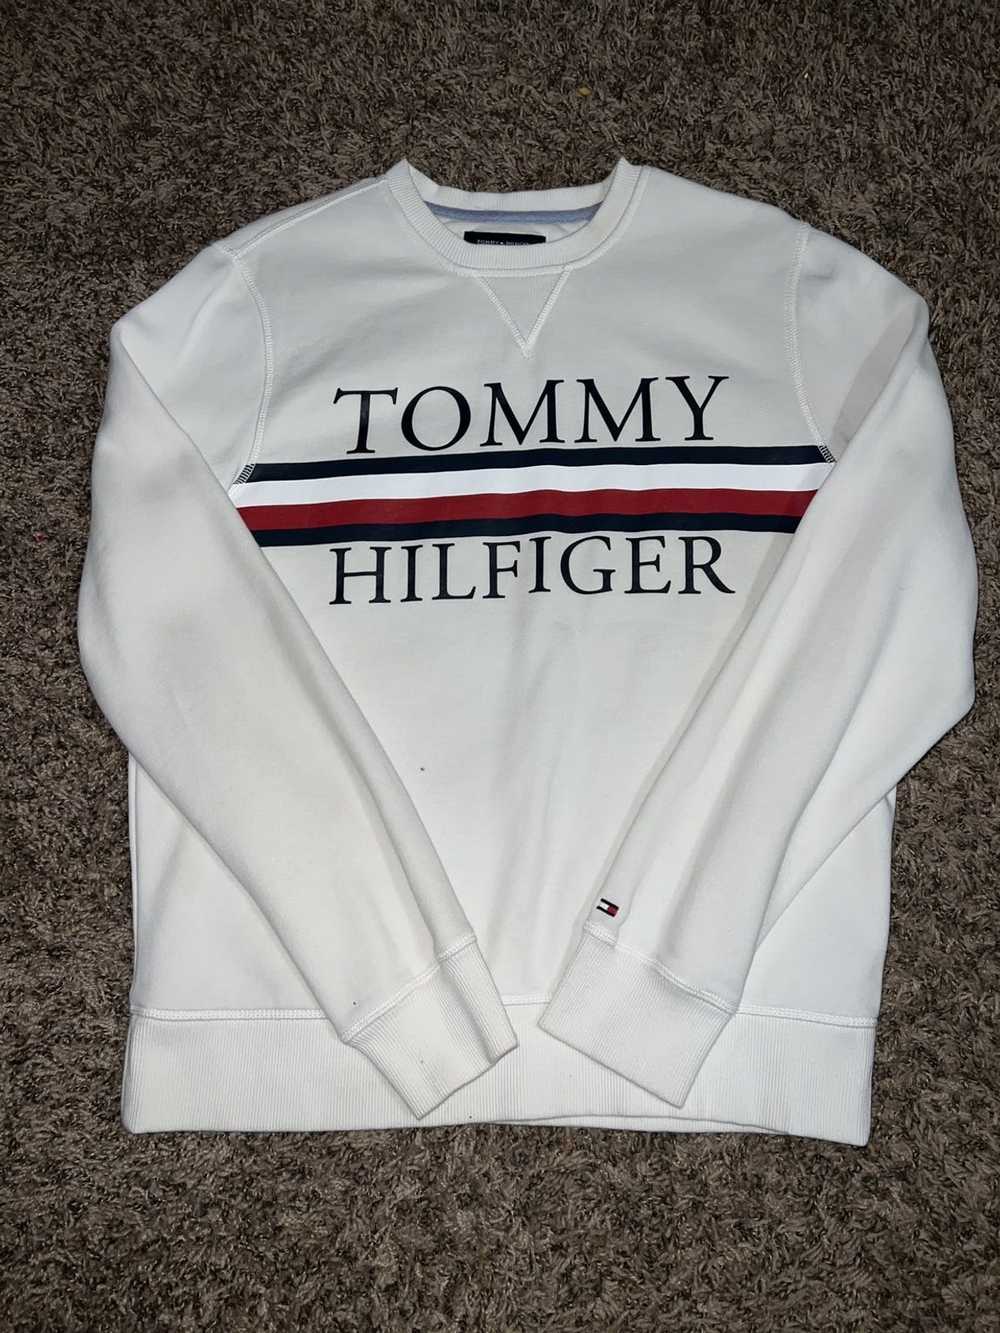 Tommy Hilfiger Tommy Hilfiger Sweater - image 2